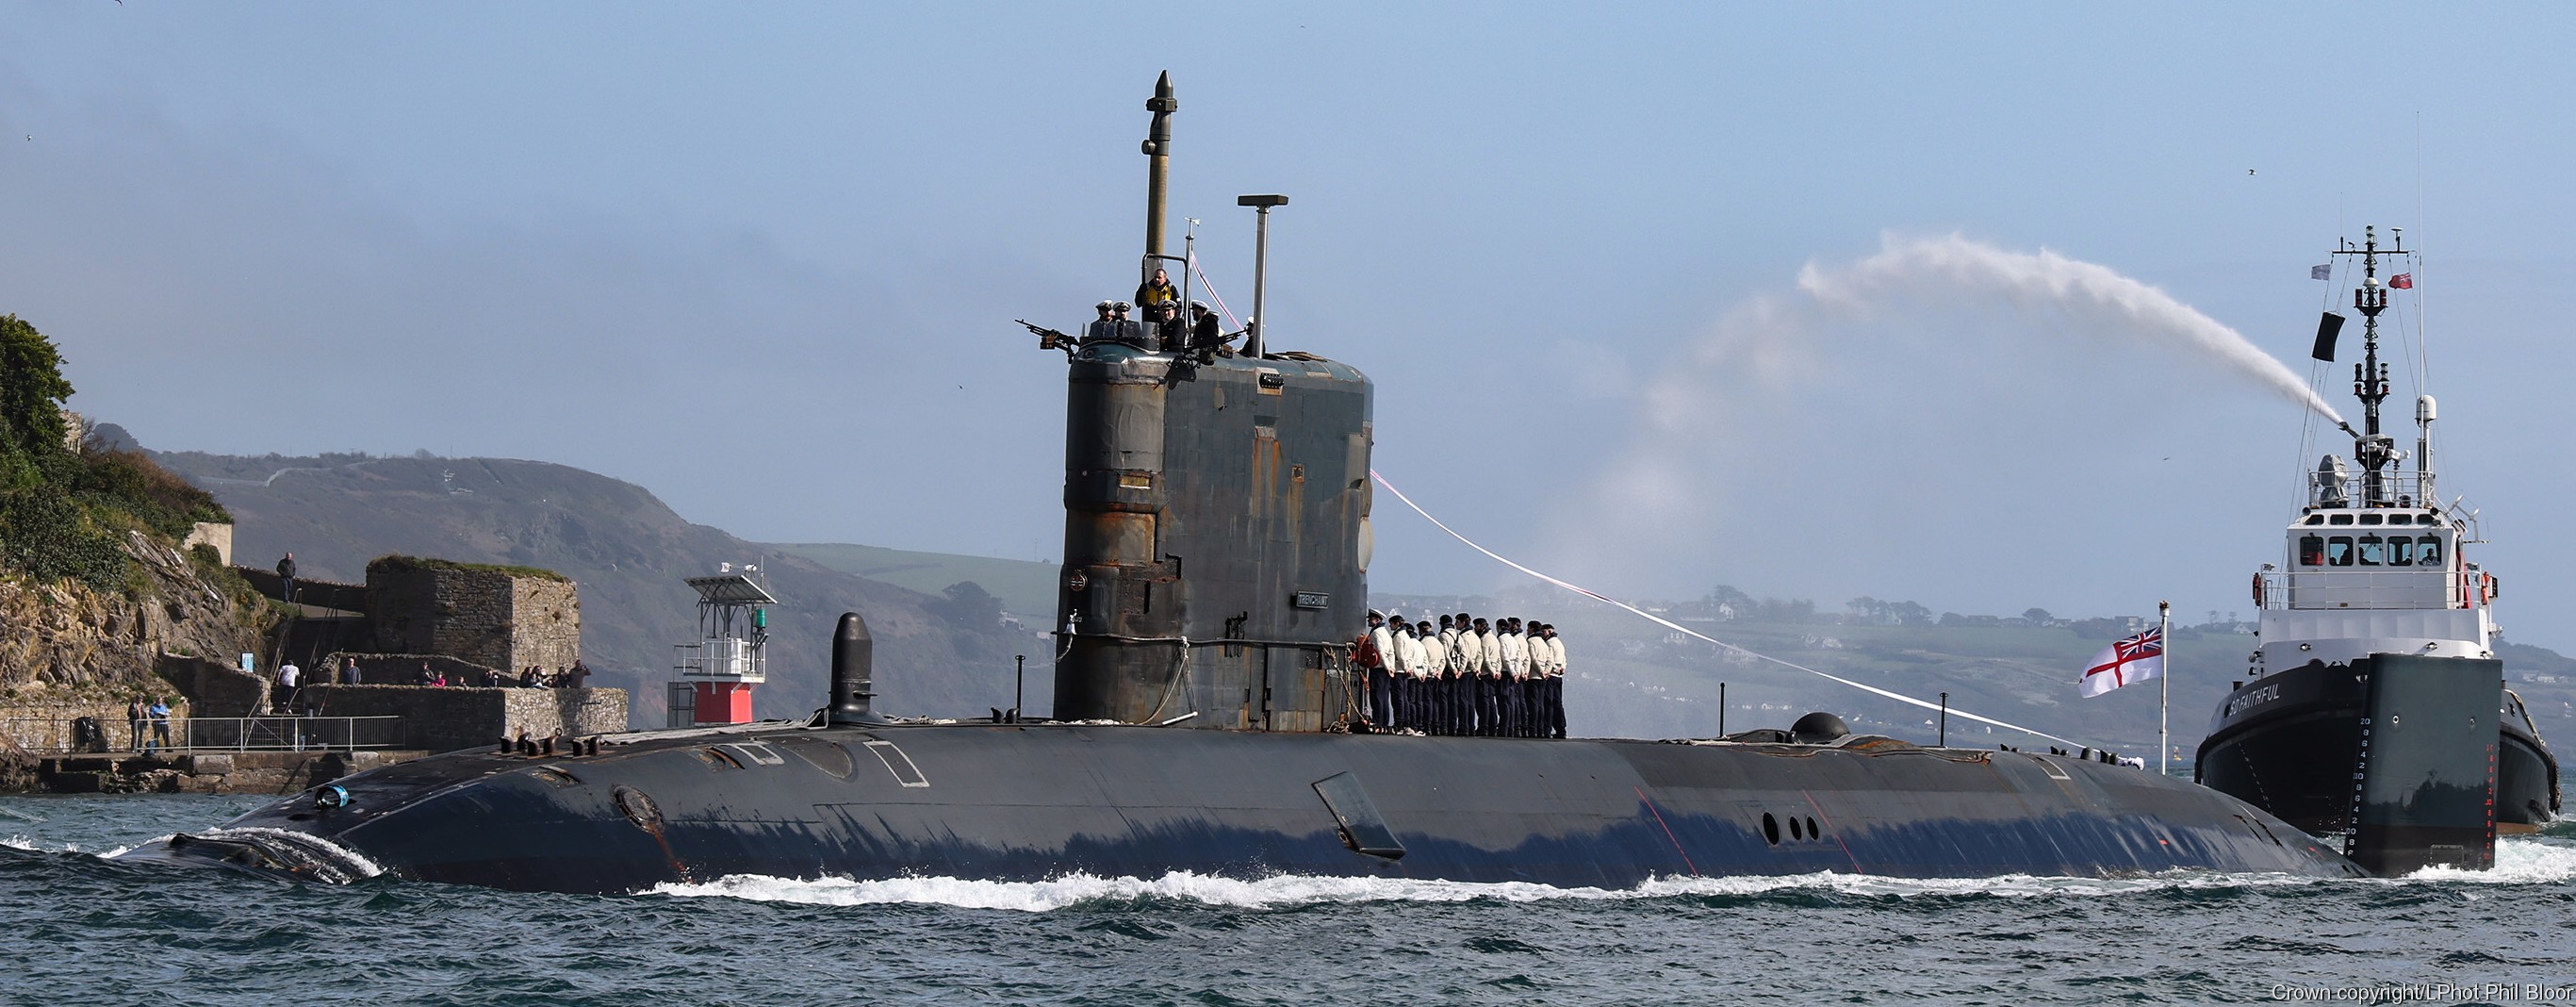 s91 hms trenchant trafalgar class attack submarine hunter killer royal navy 25